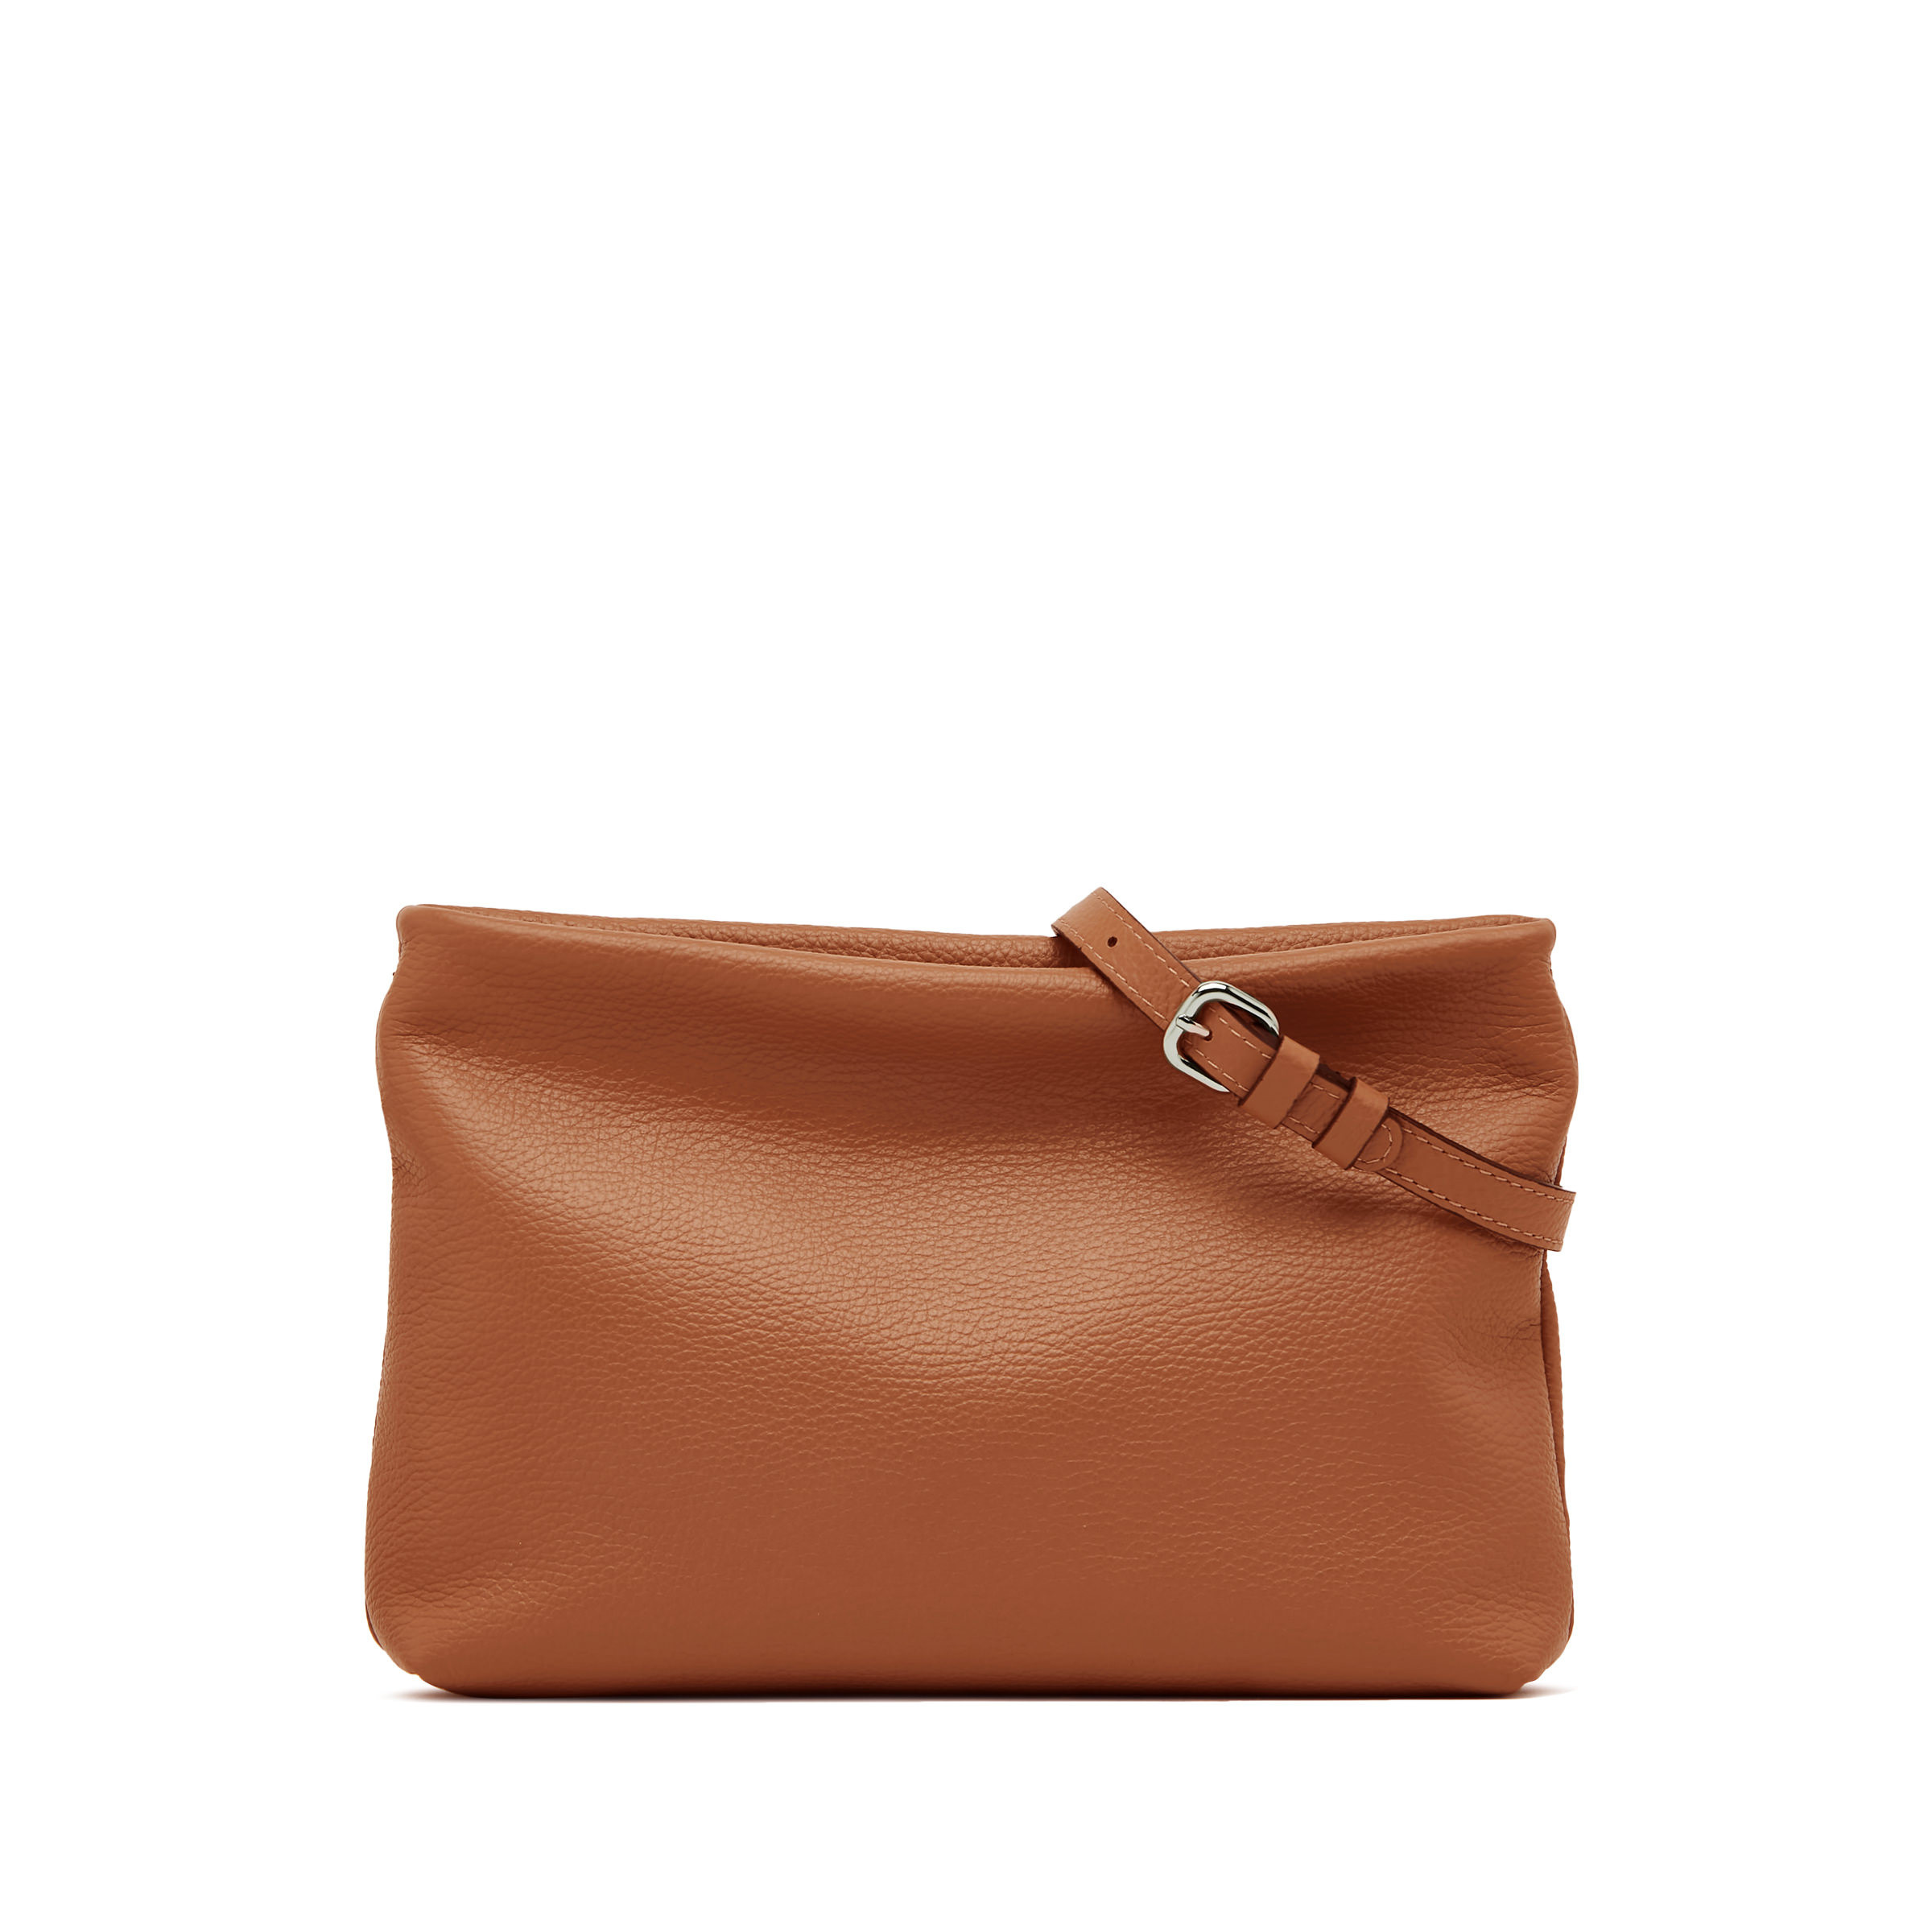 Gianni Chiarini - Brenda leather bag, Brown, large image number 1